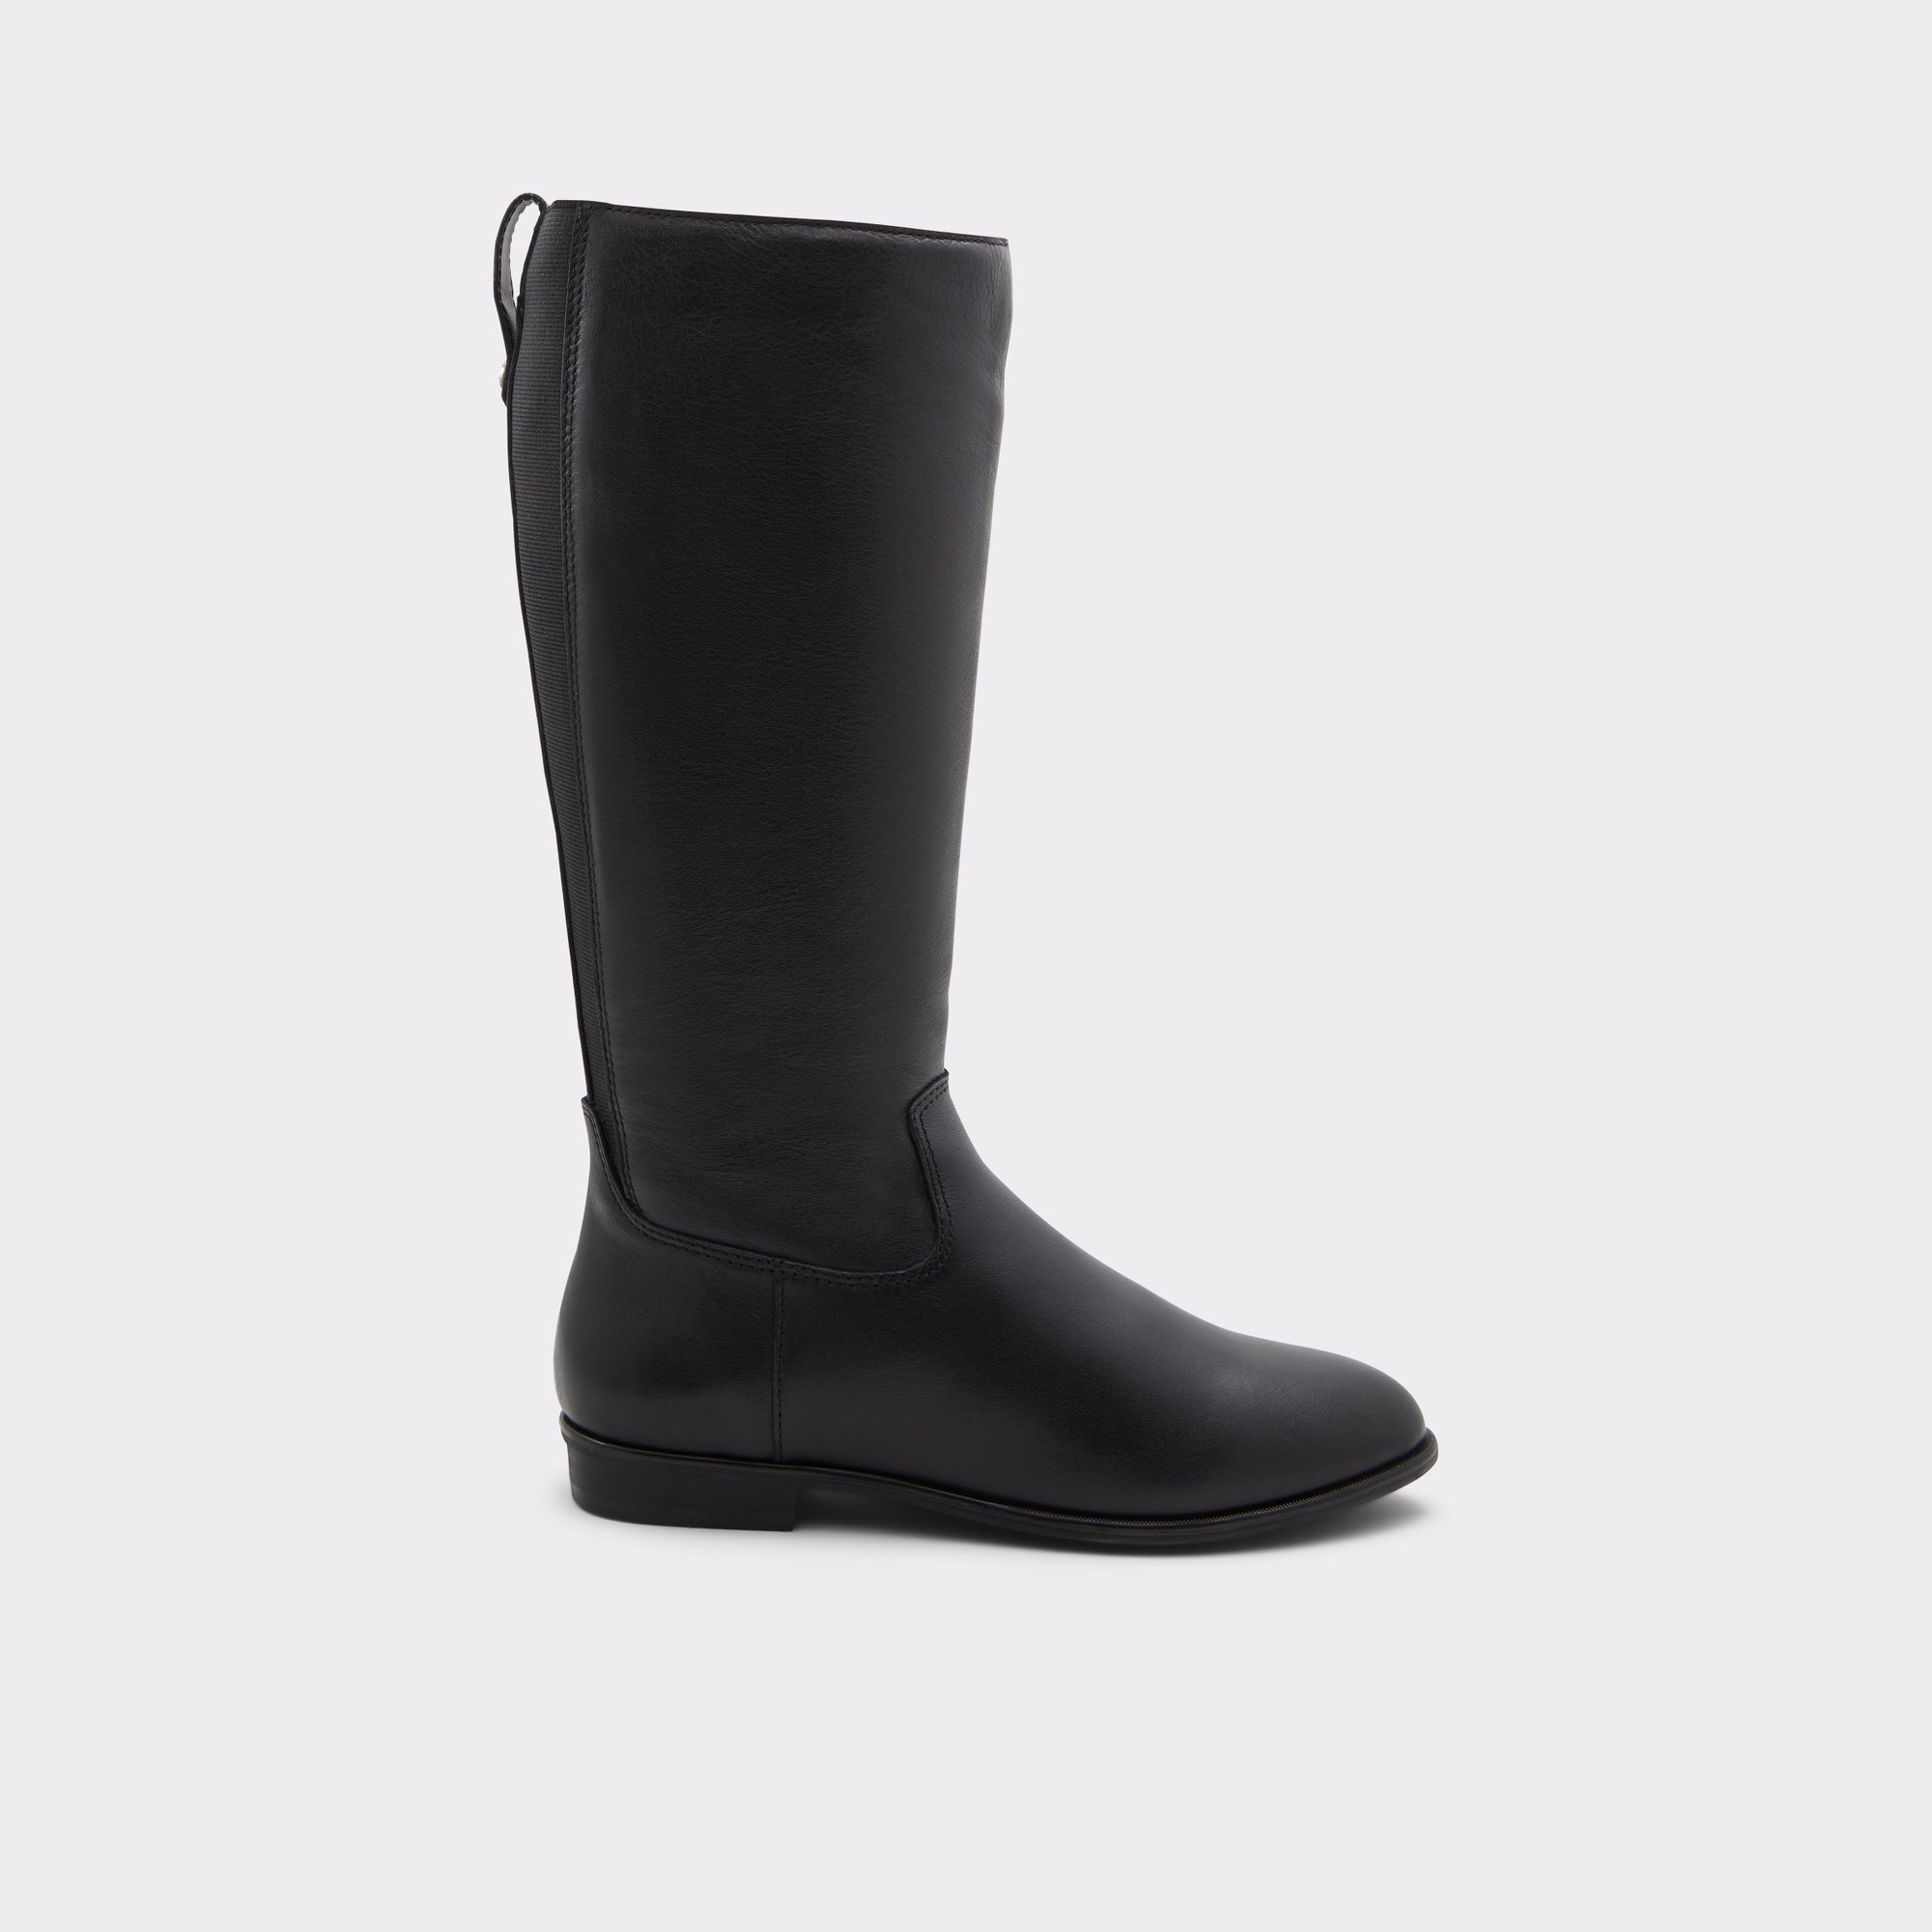 Riraven-wc Black Women's Tall Boots | ALDO US